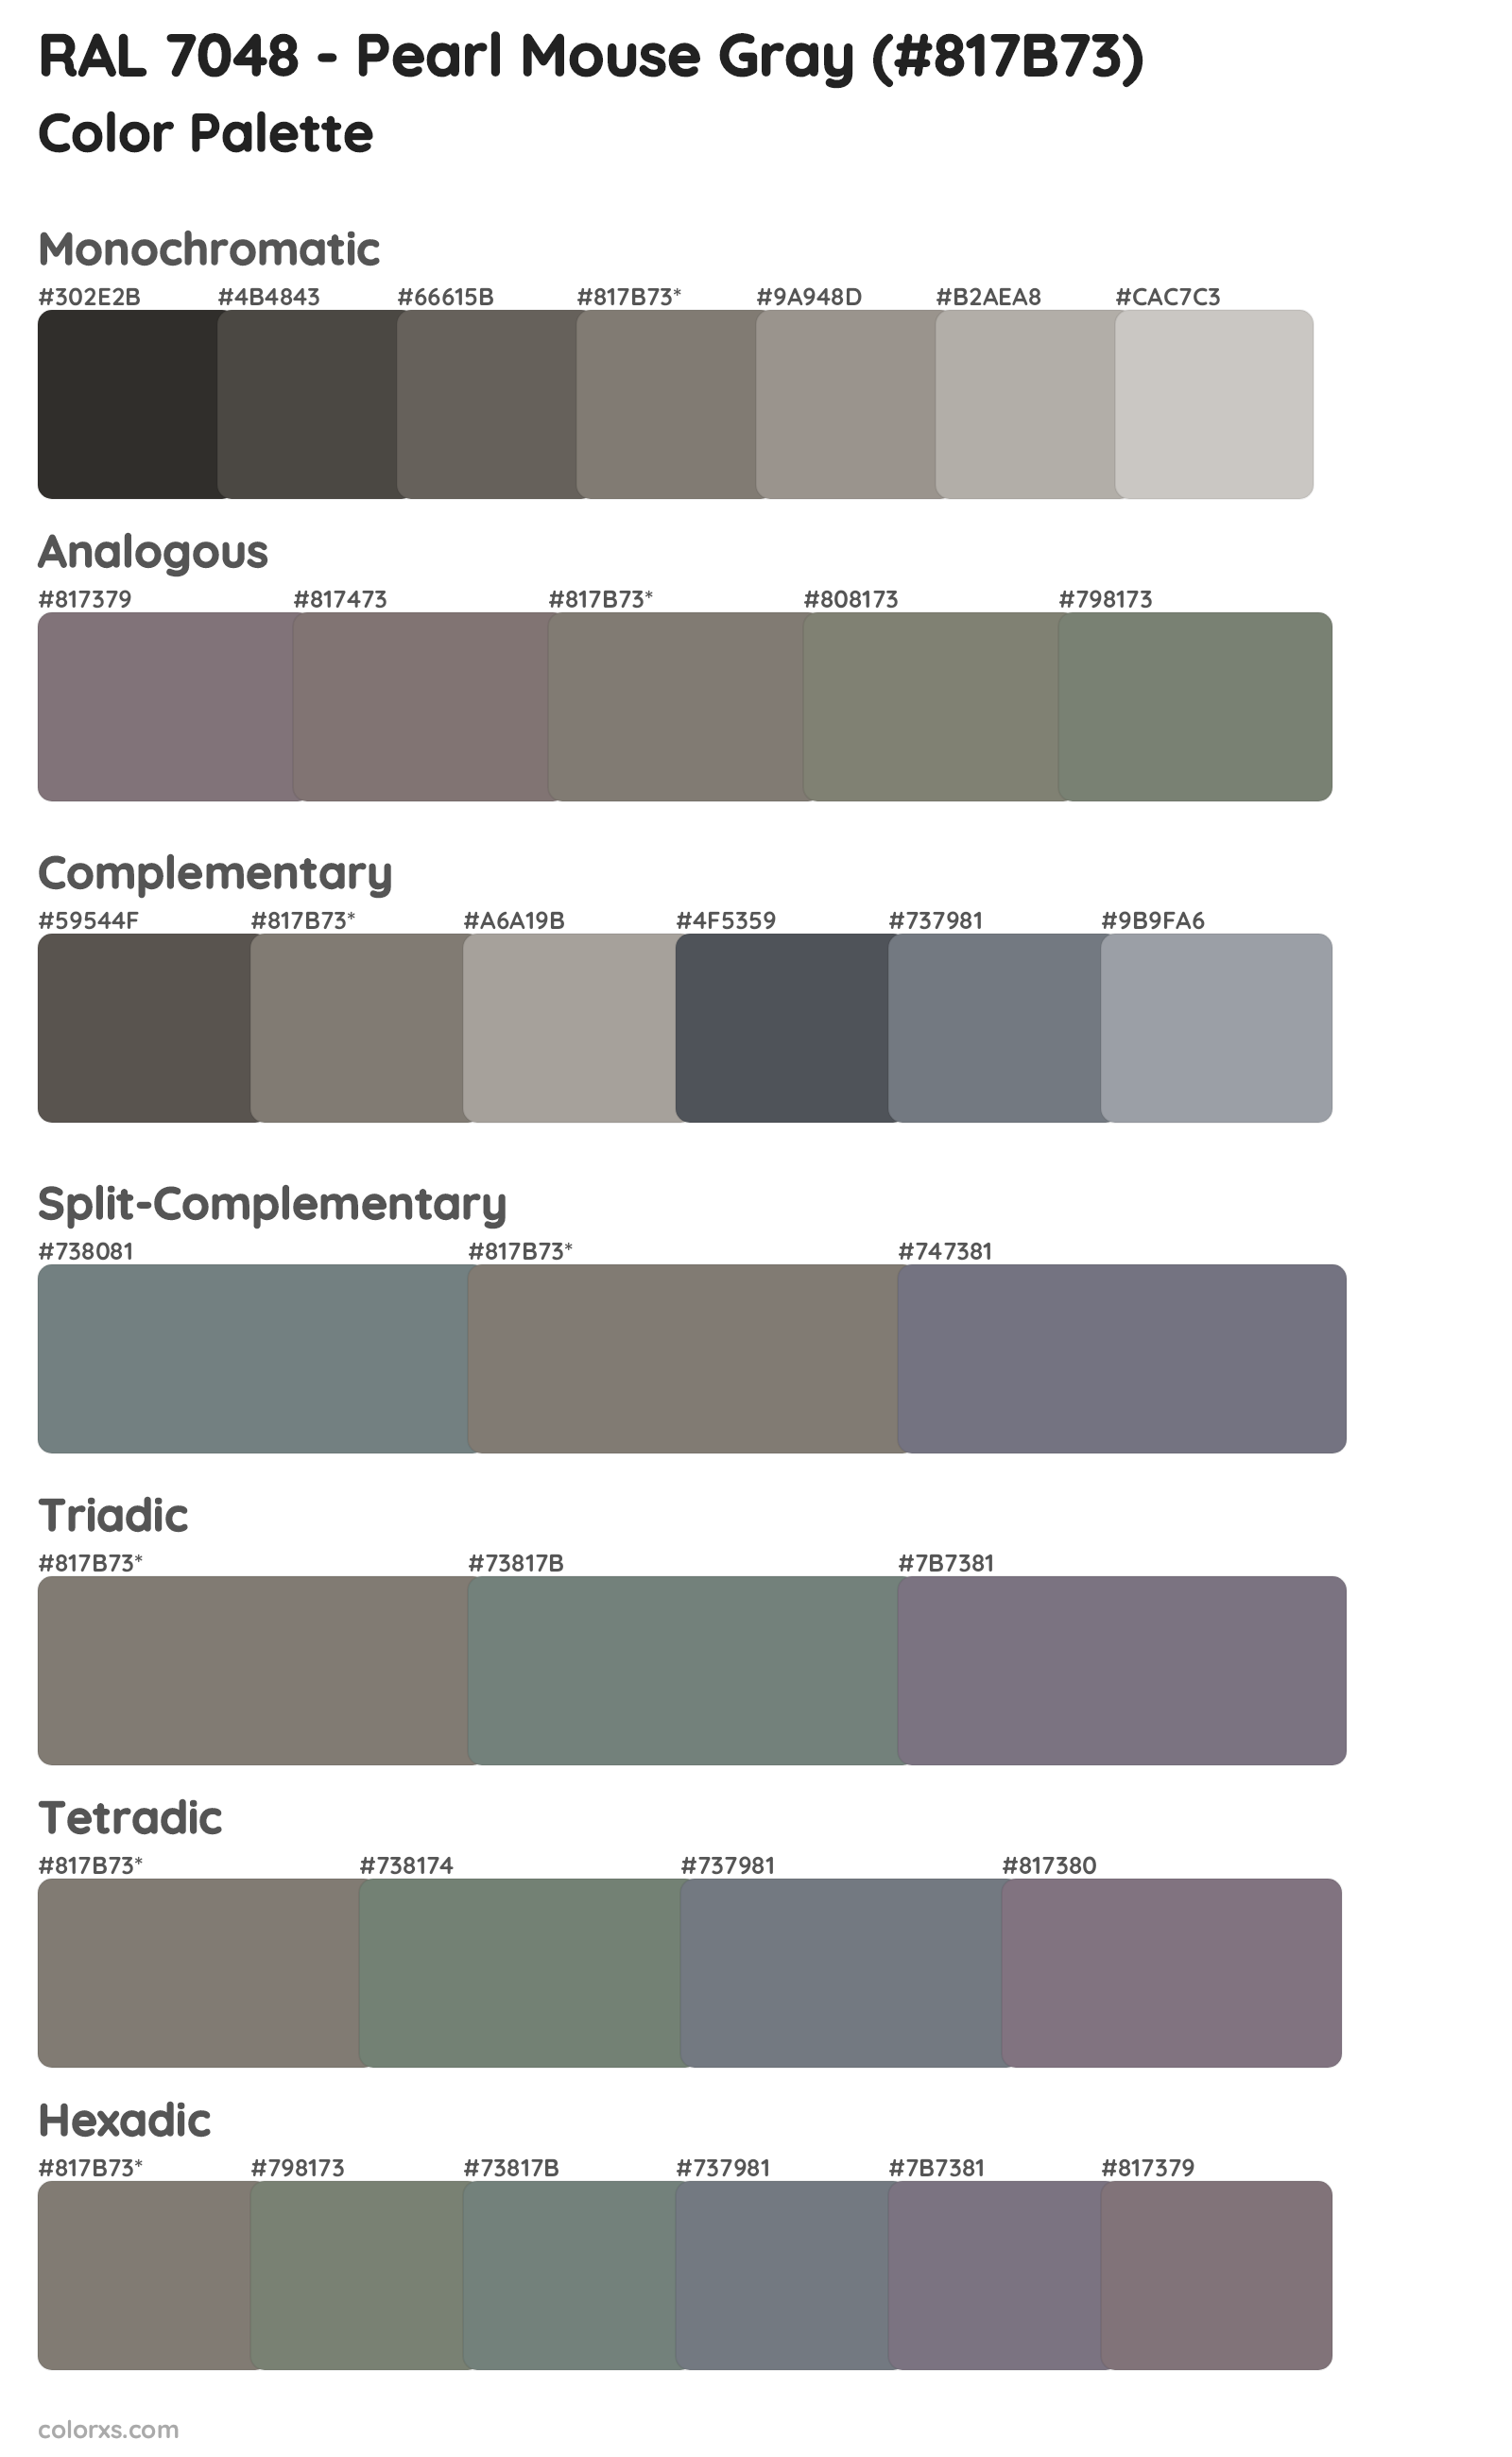 RAL 7048 - Pearl Mouse Gray Color Scheme Palettes